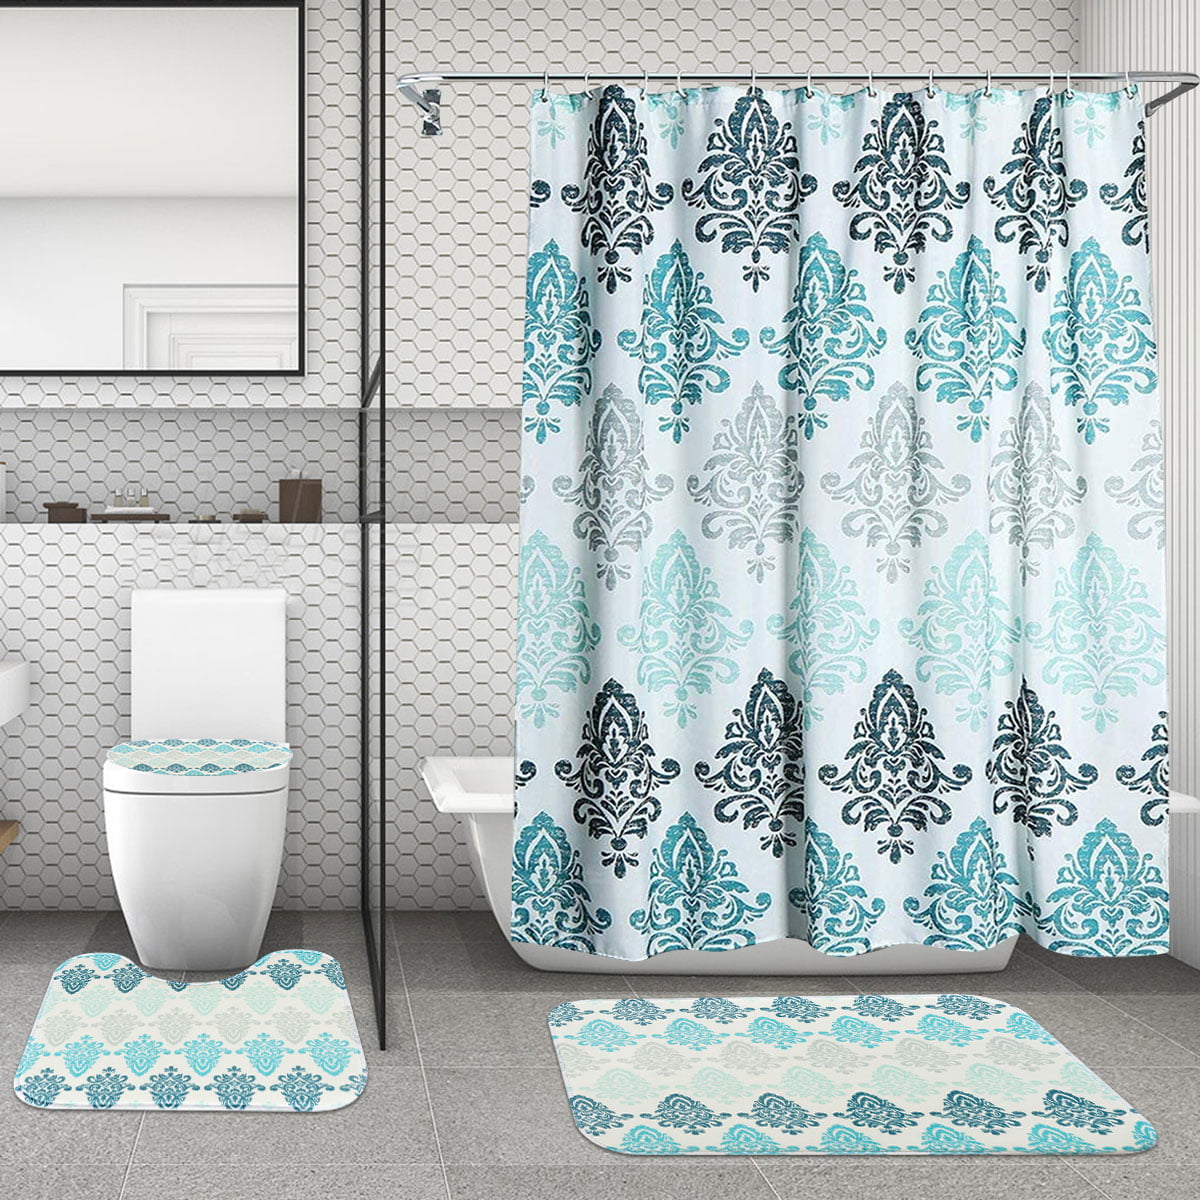 Spider-man Bath Rugs Shower Curtain Non-slip Bathroom Mats Toilet Lid Cover Gift 